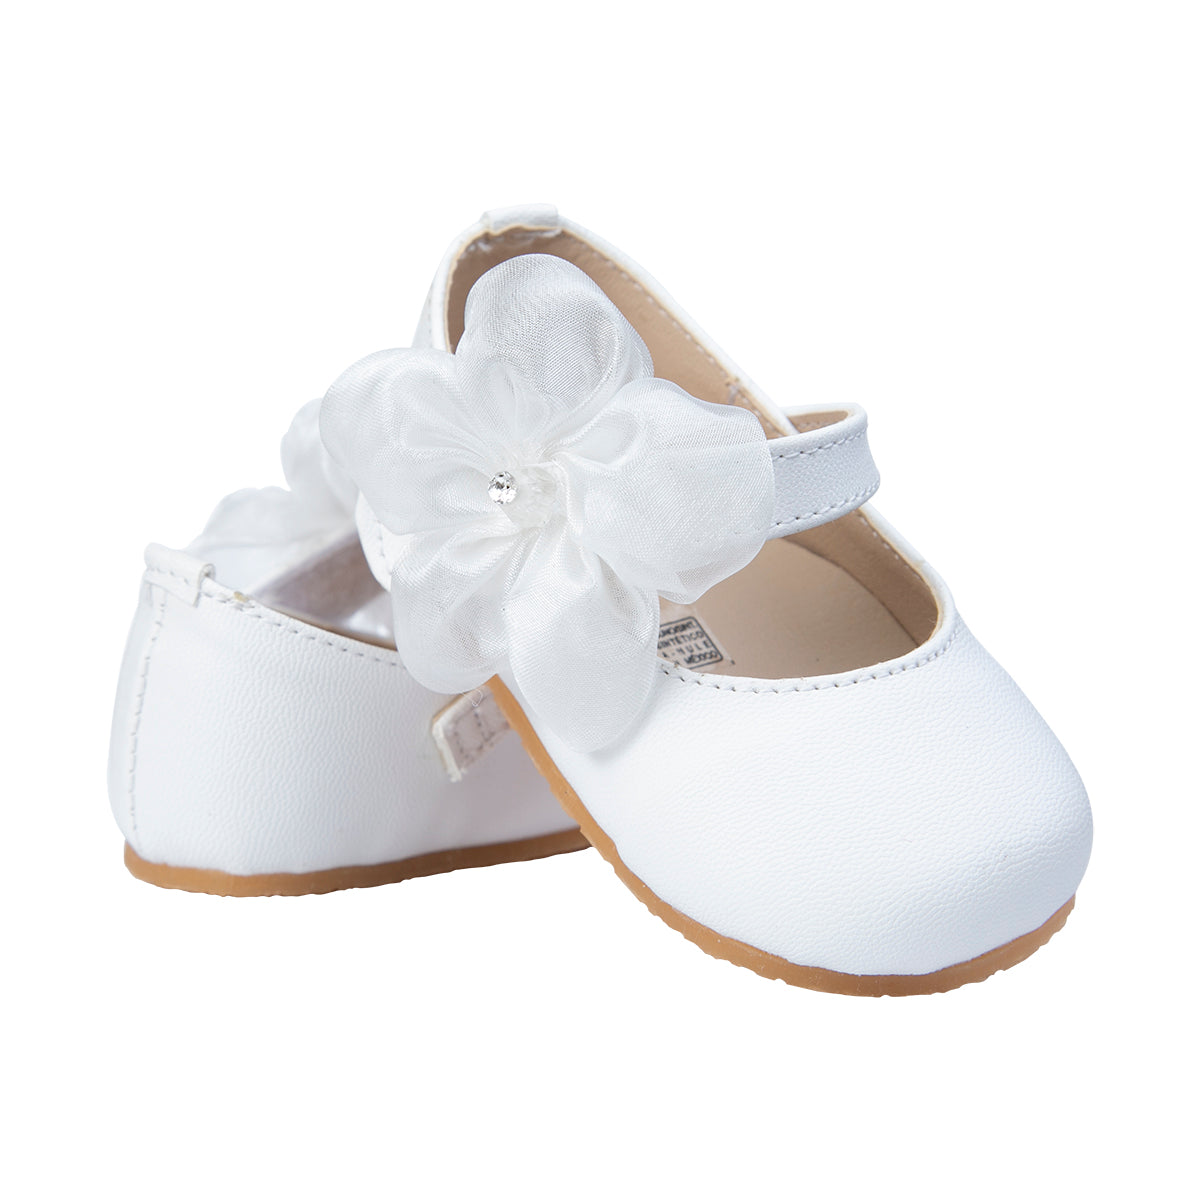 zapato bautizo nina blanco ceremonia bebe